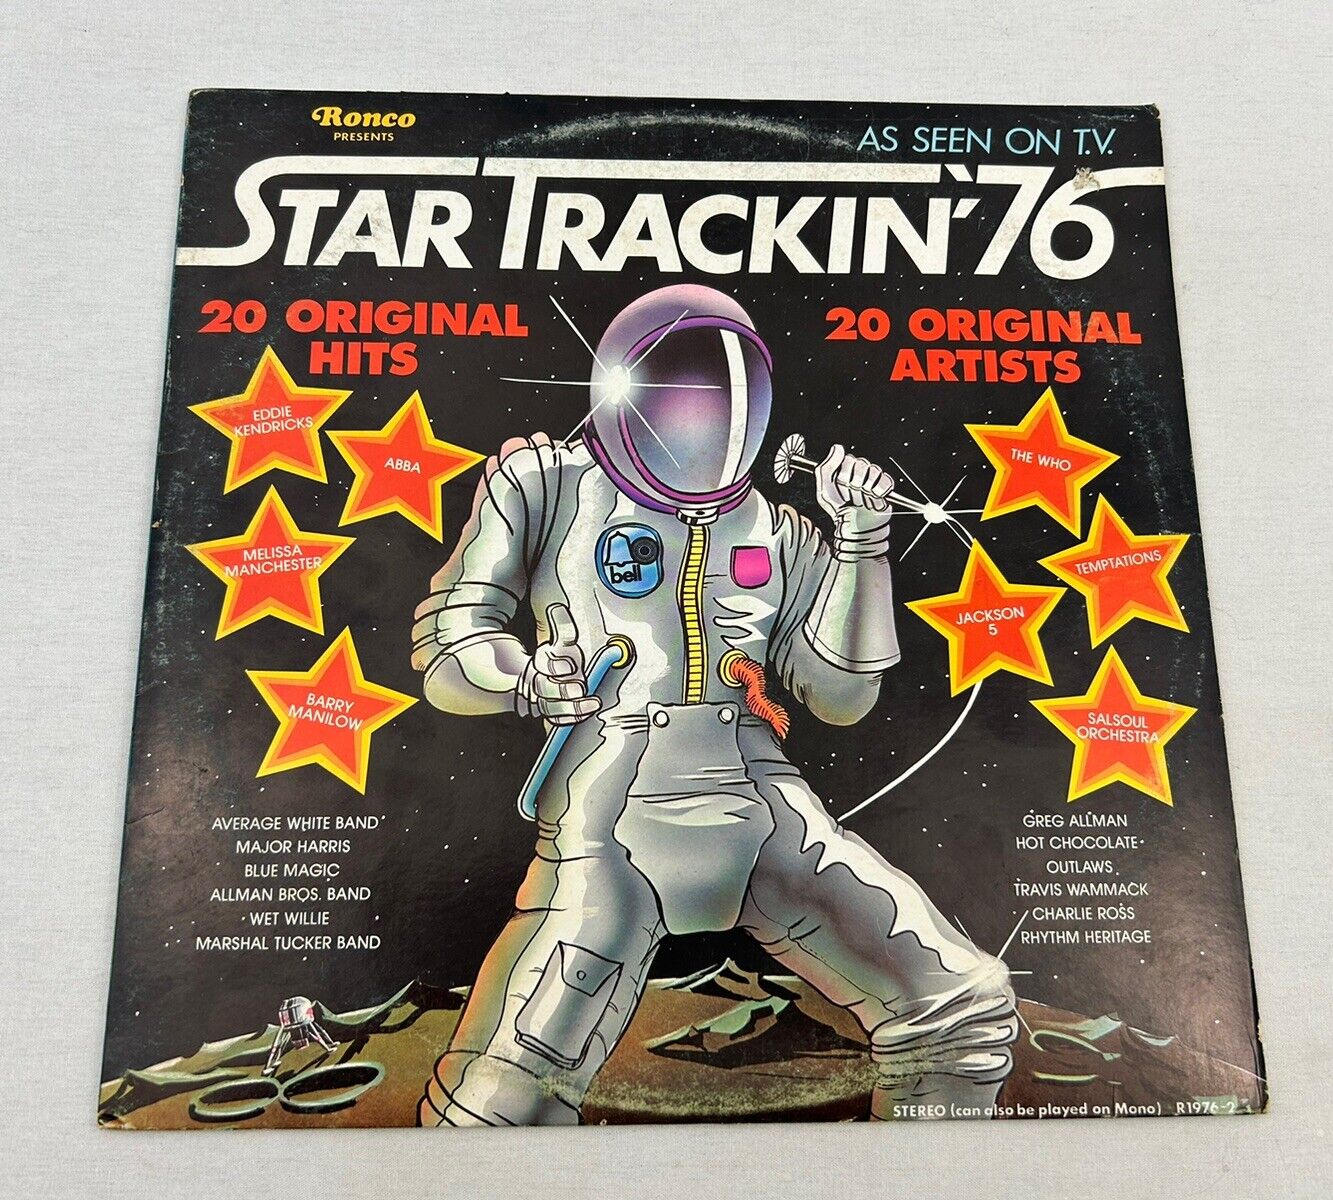 1976 Star Trackin 76 Ronco As Seen On TV Vinyl LP Album READ